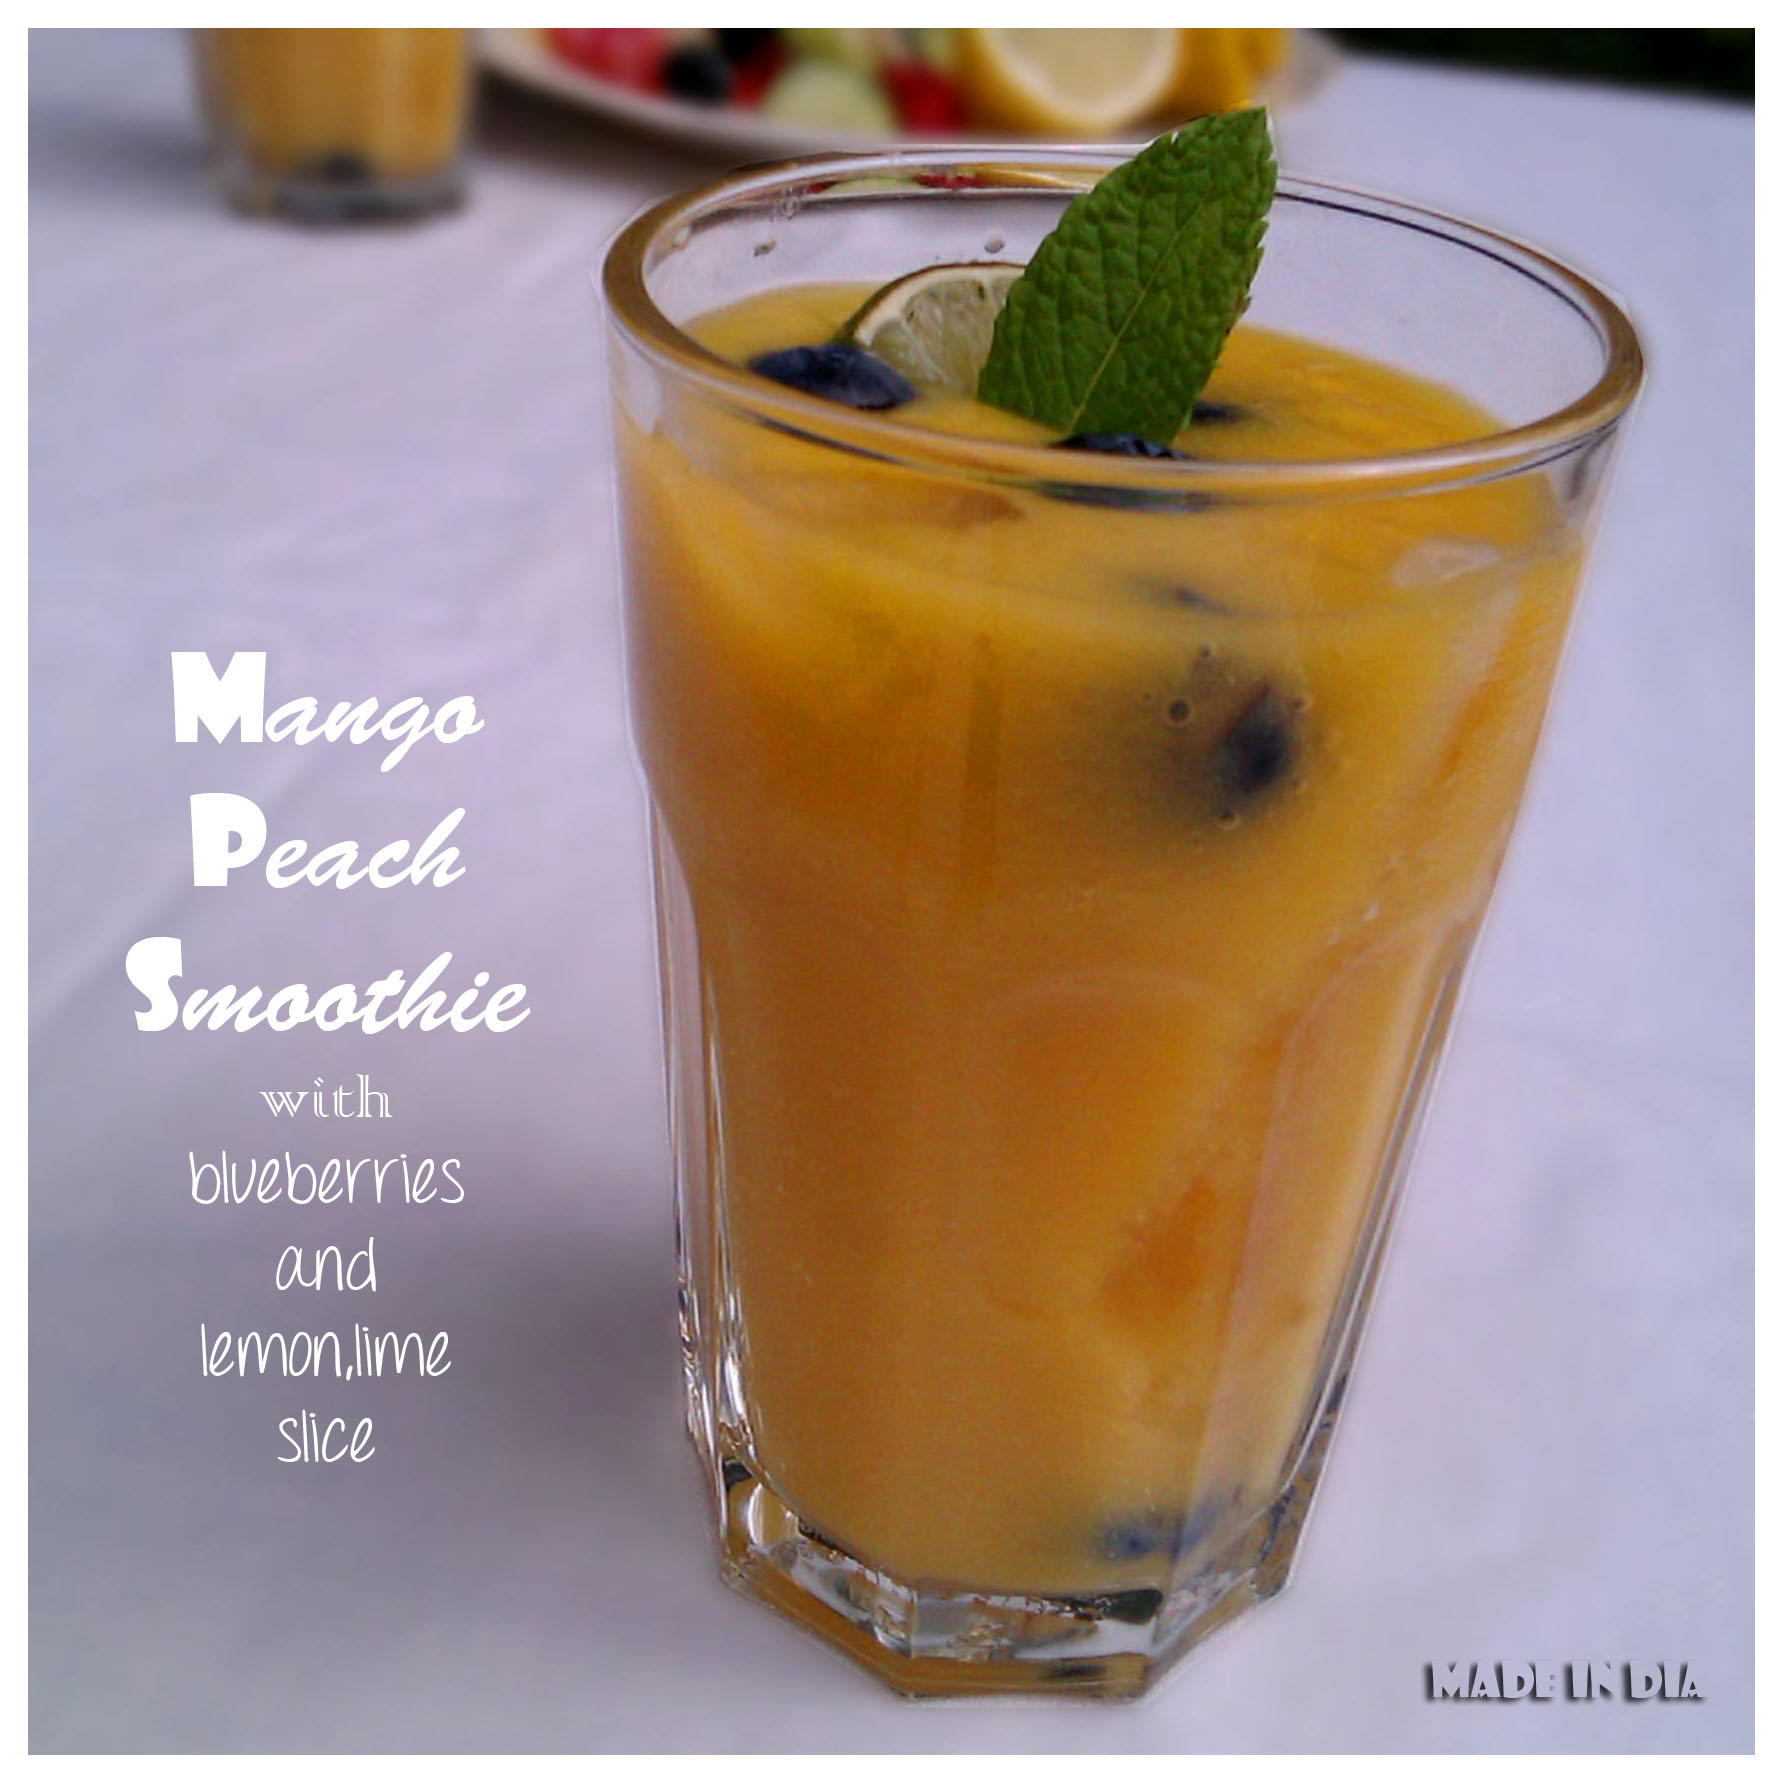 Mango peach smoothie